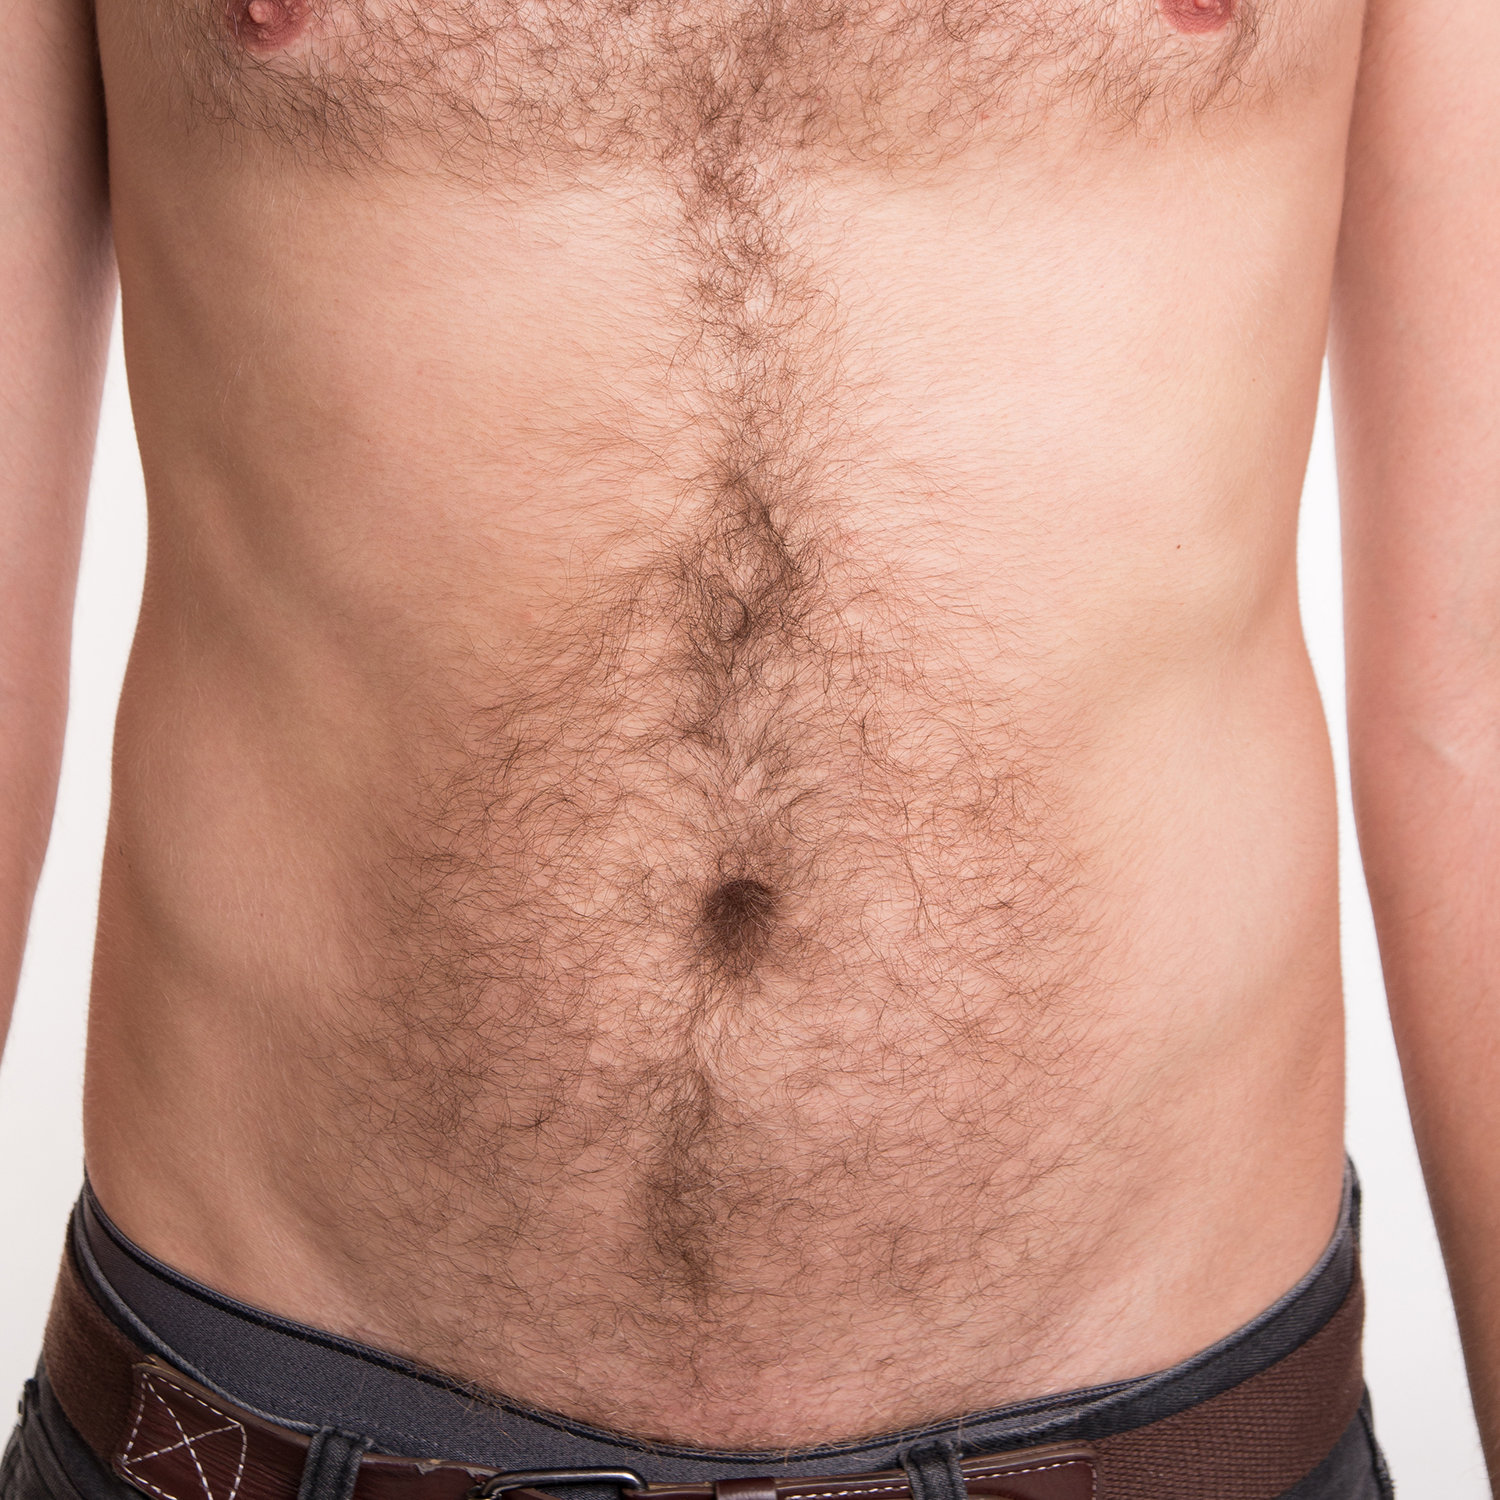 грудь и живот у мужчин фото 9